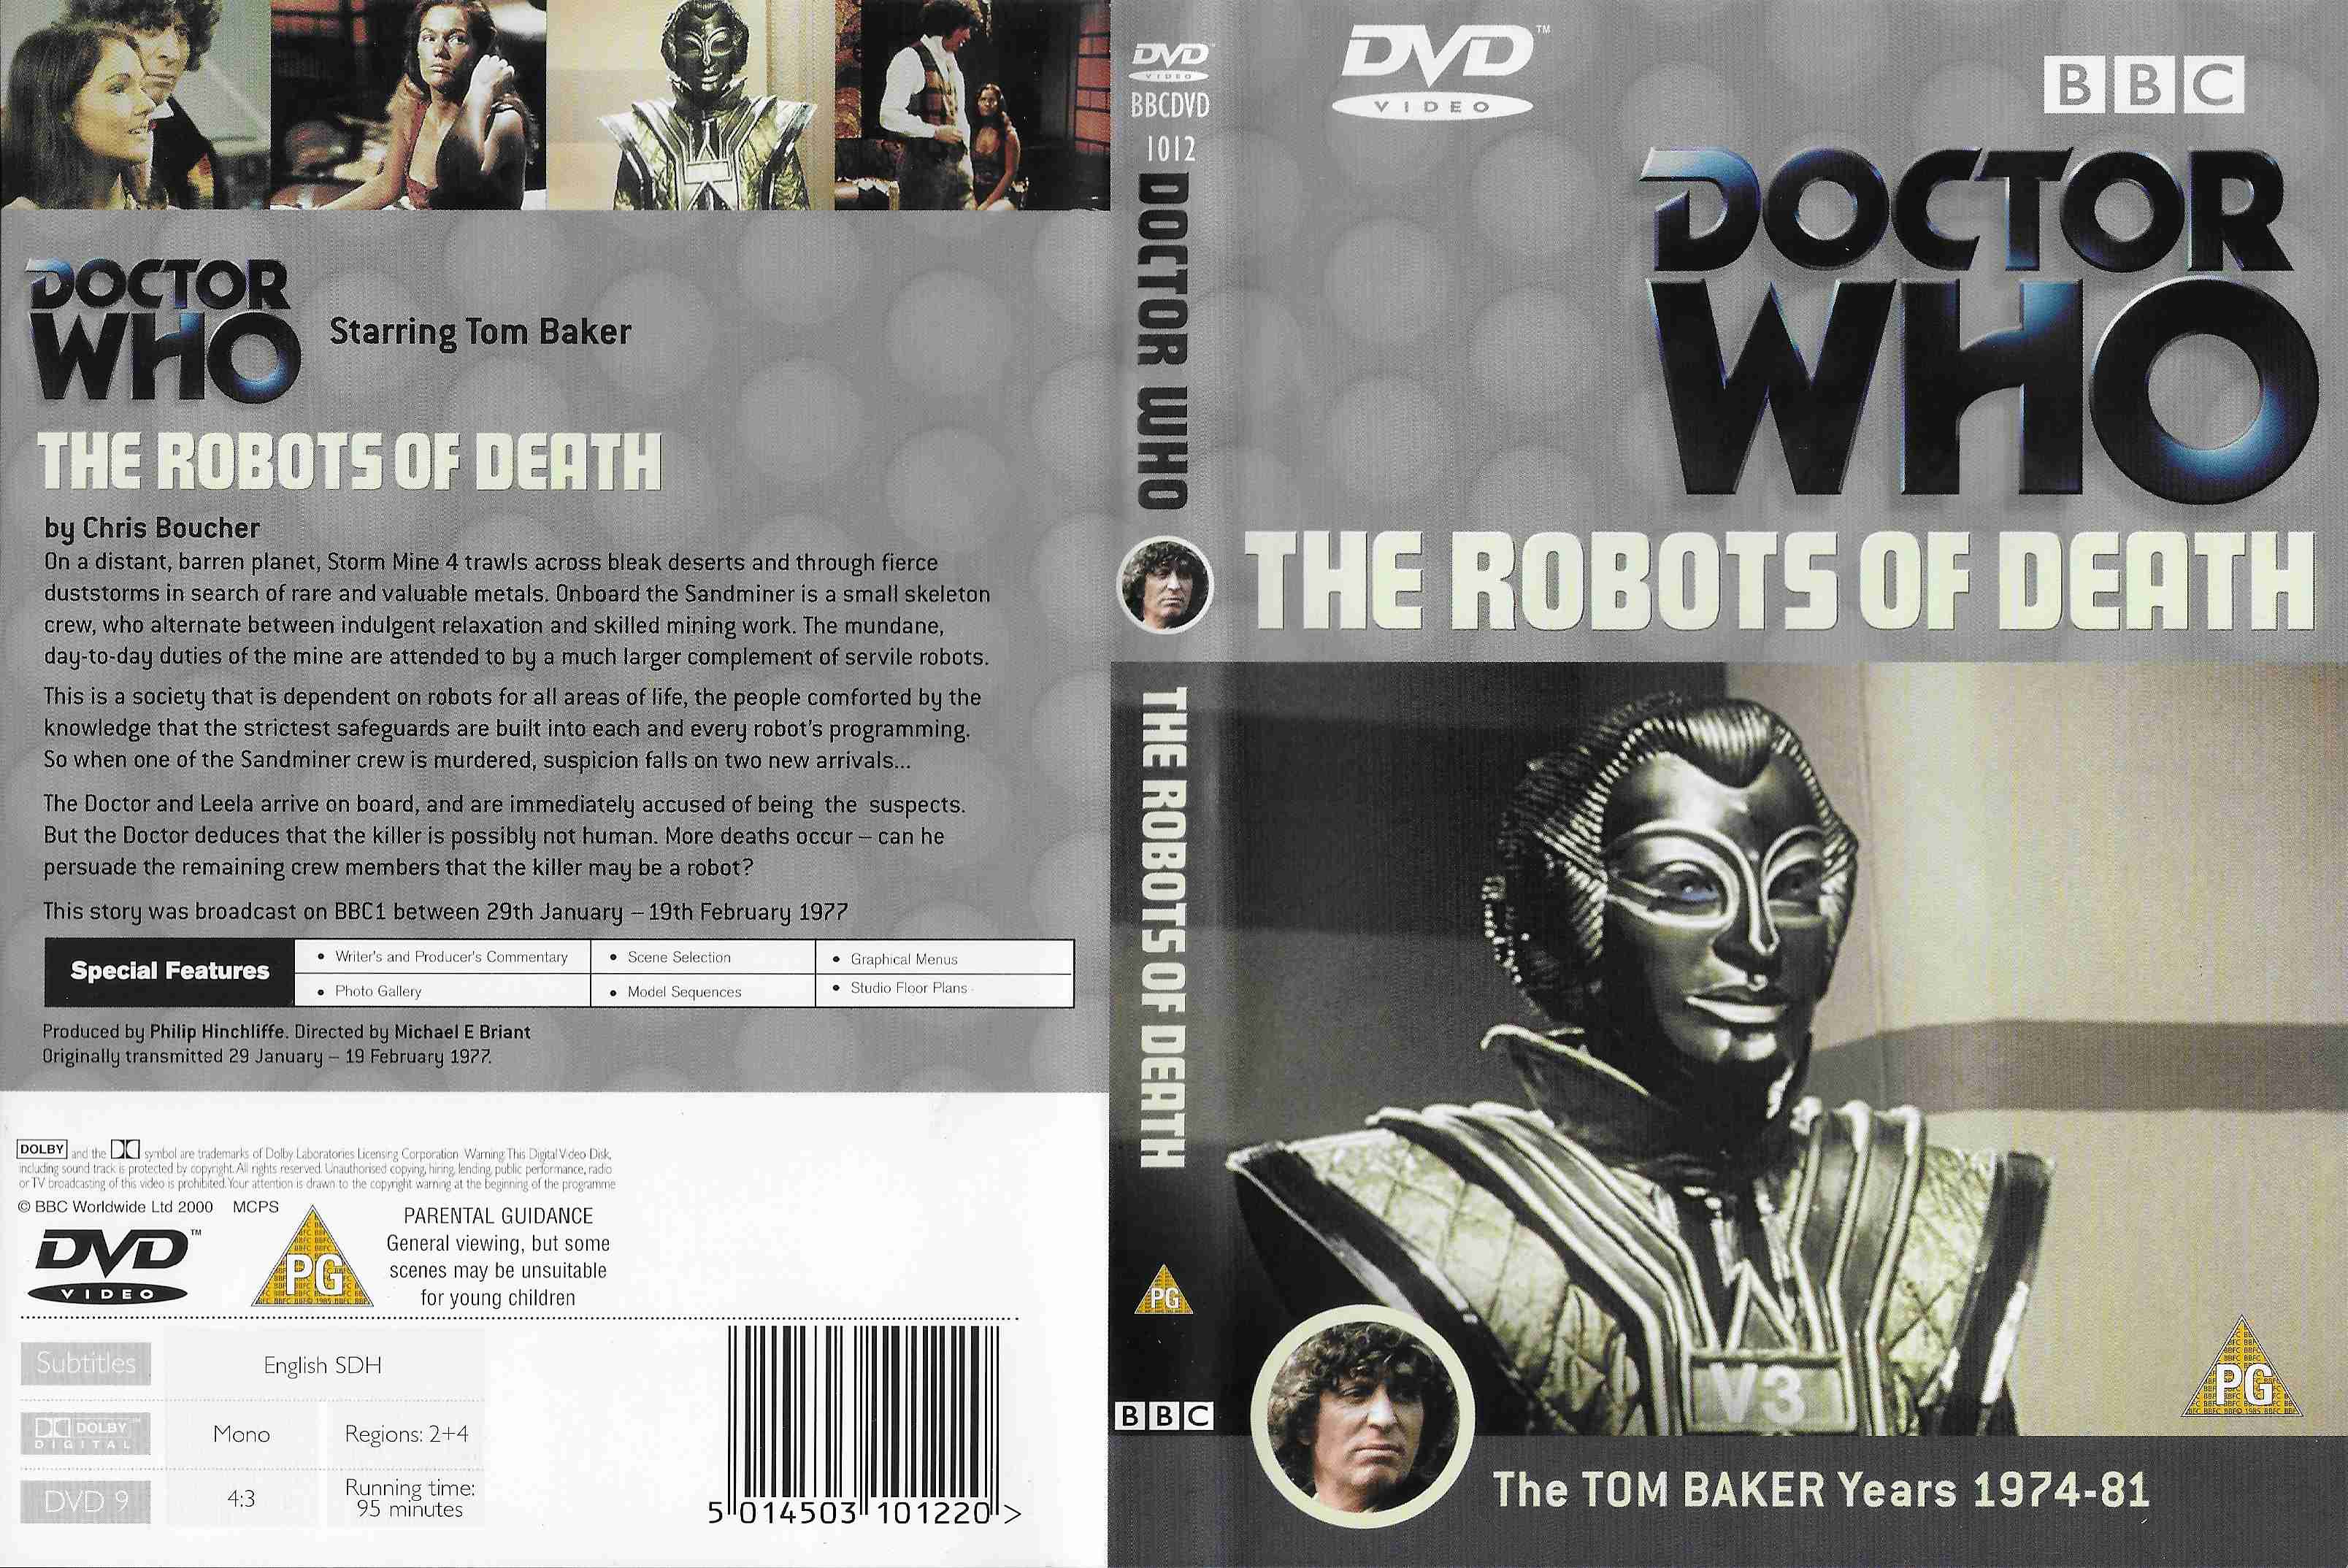 Back cover of BBCDVD 1012